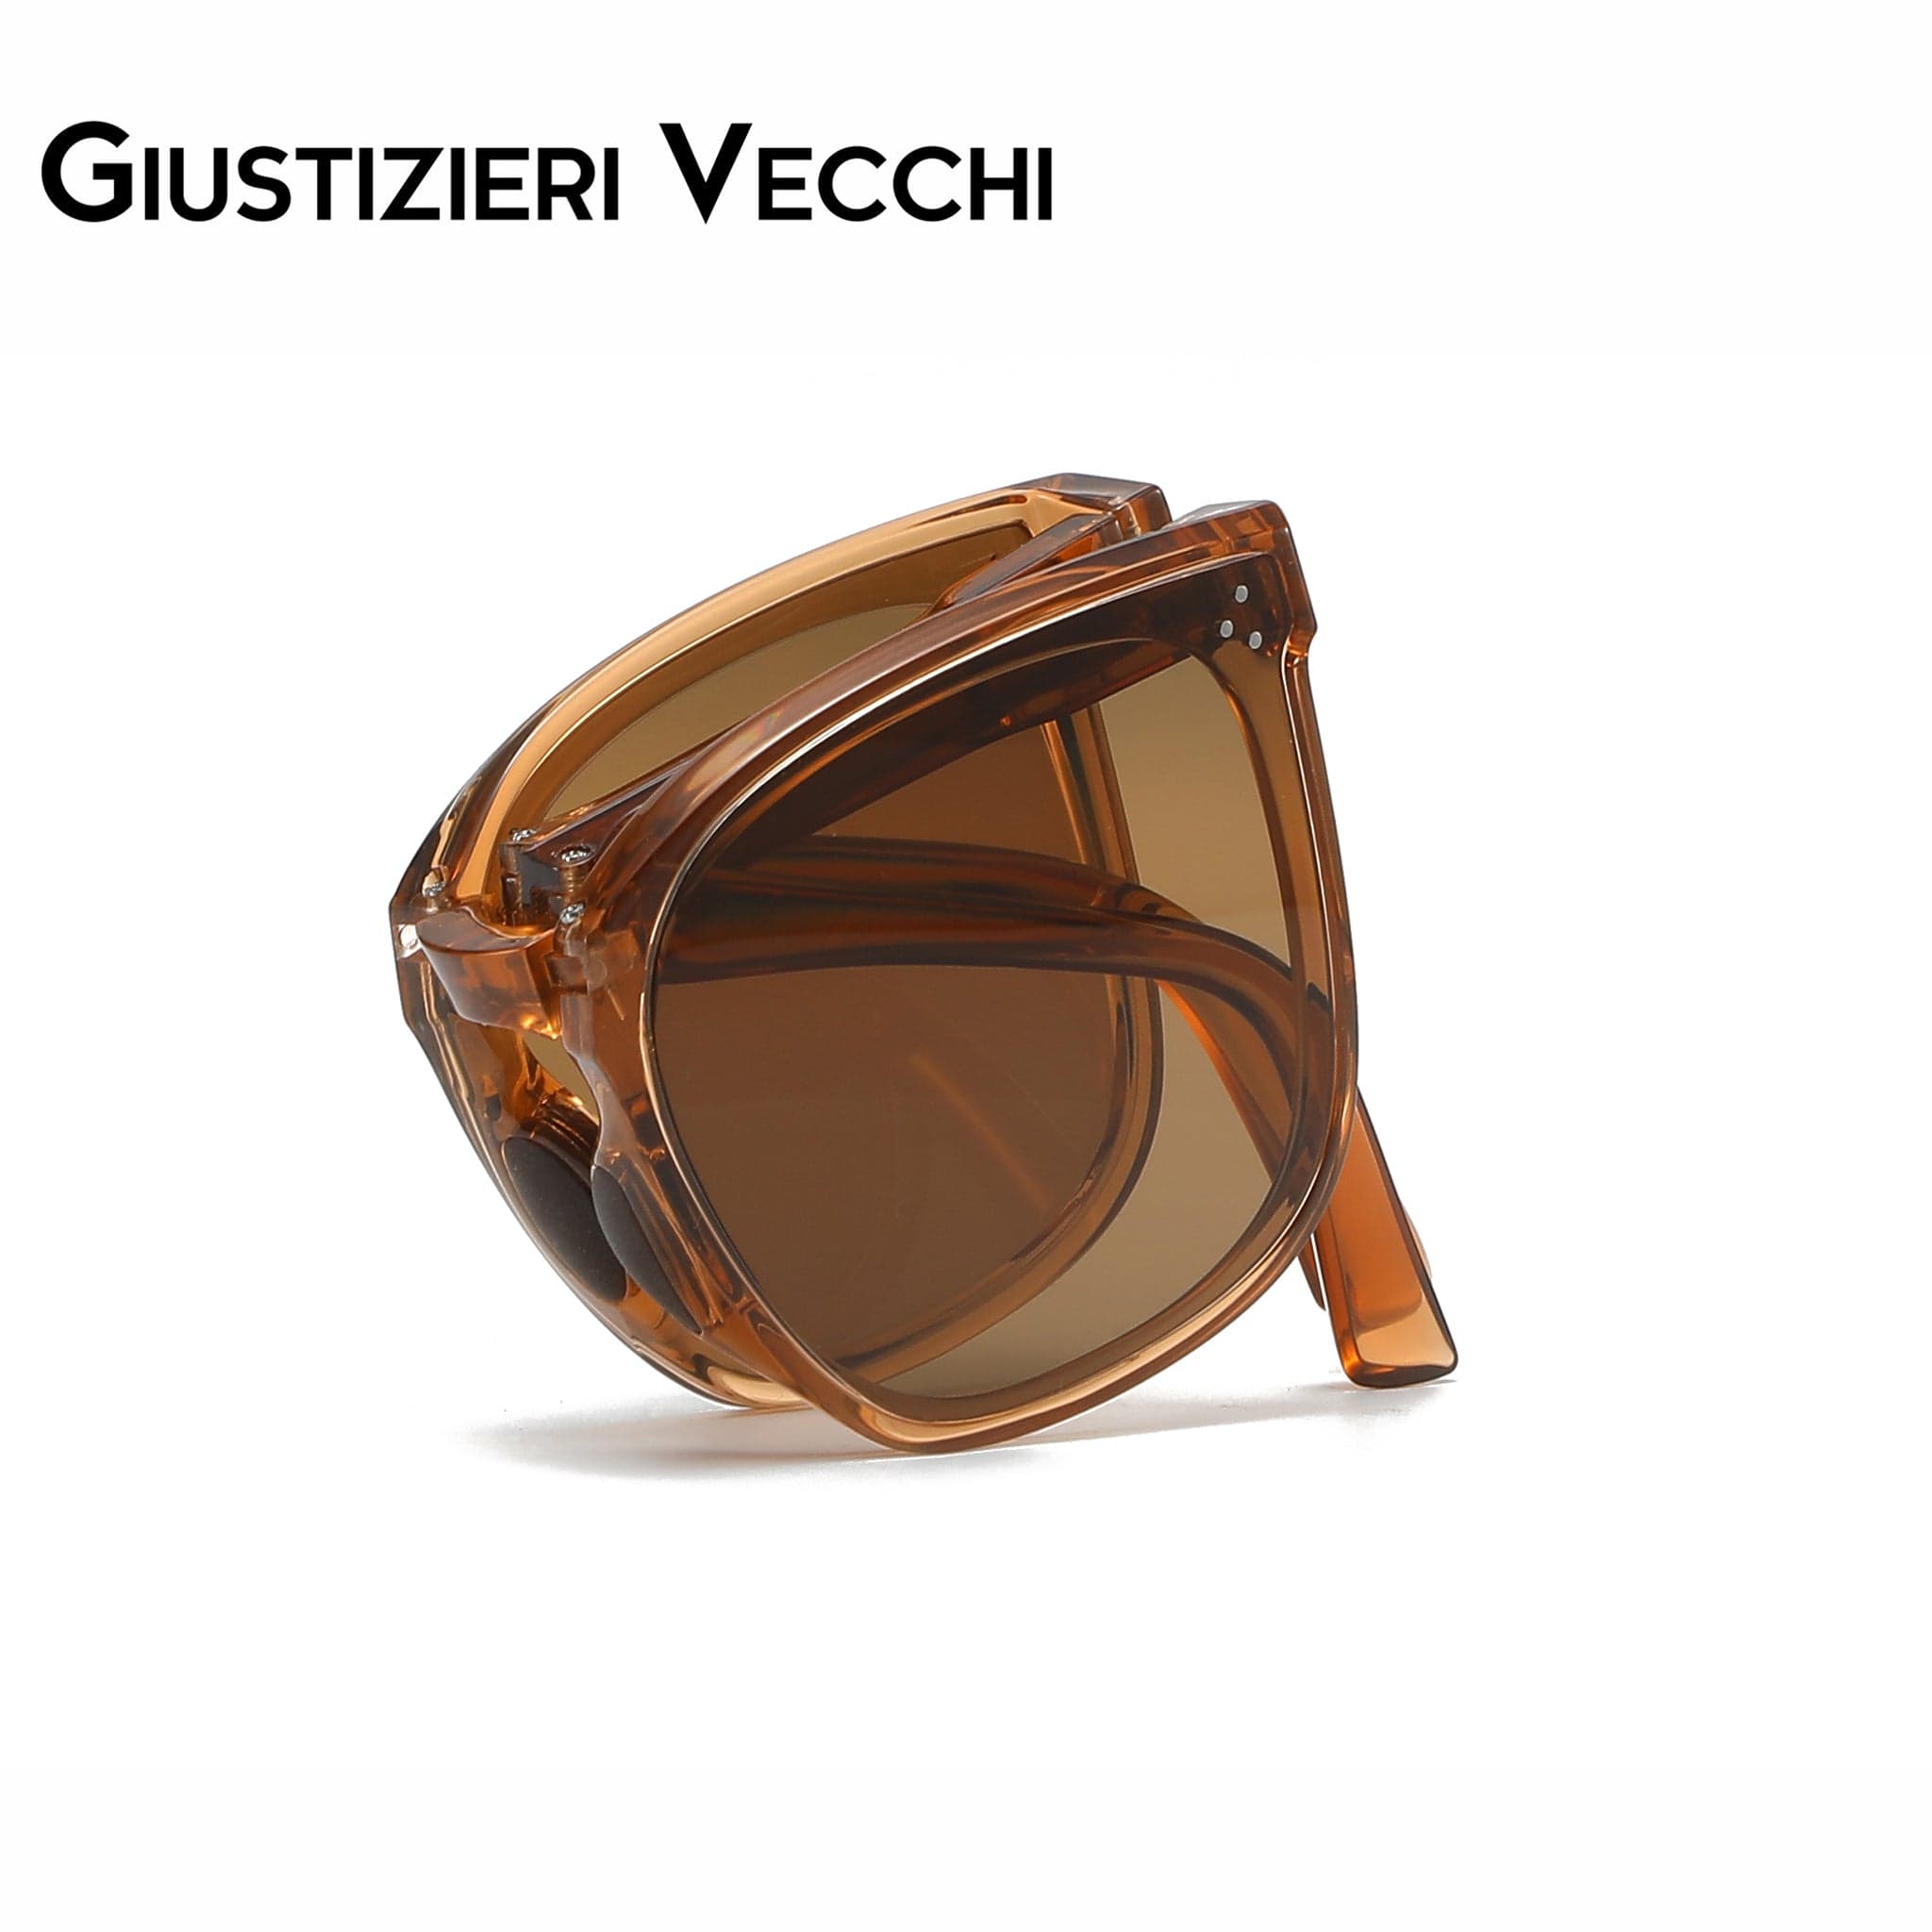 GIUSTIZIERI VECCHI Sunglasses Medium / Pale Brown Sassy Chic Quattro